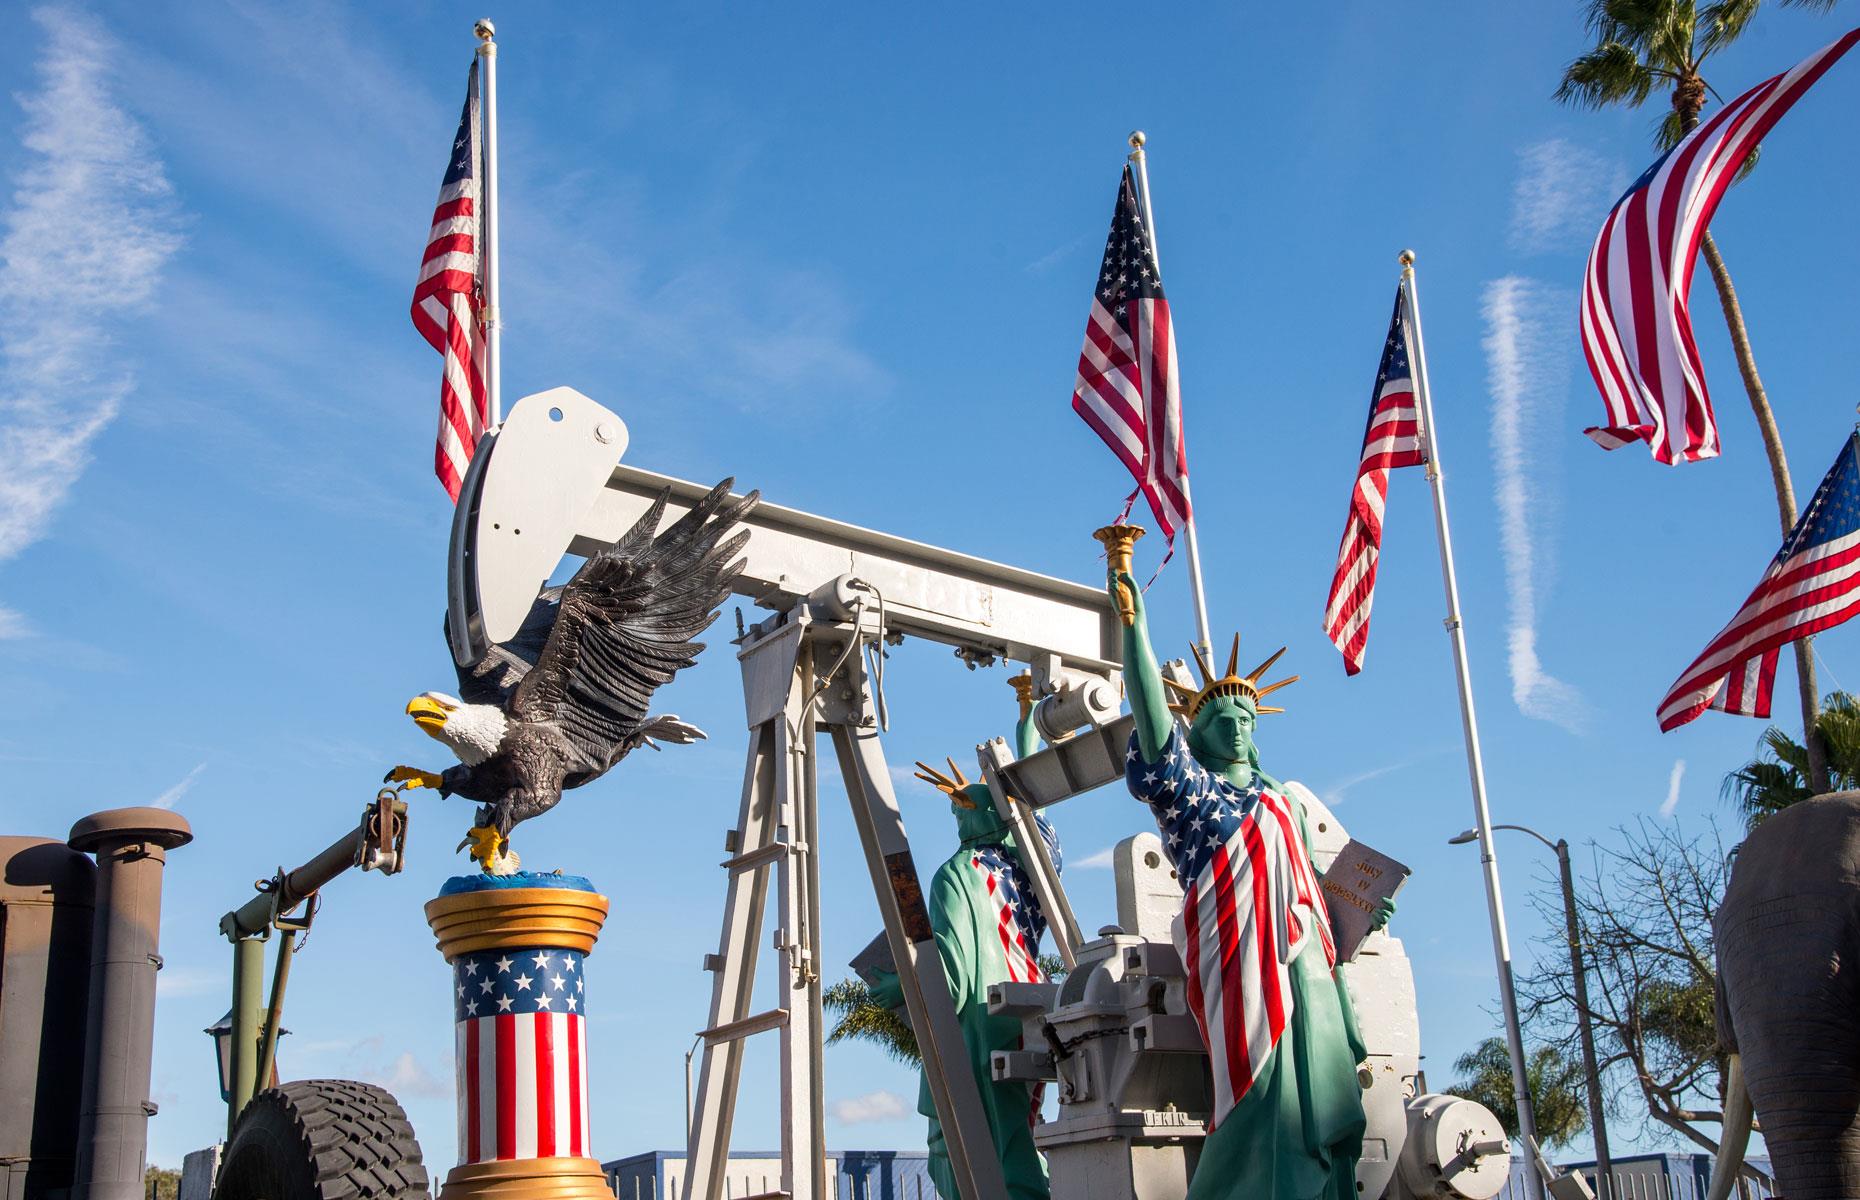 1. United States: 16.585 million barrels per day